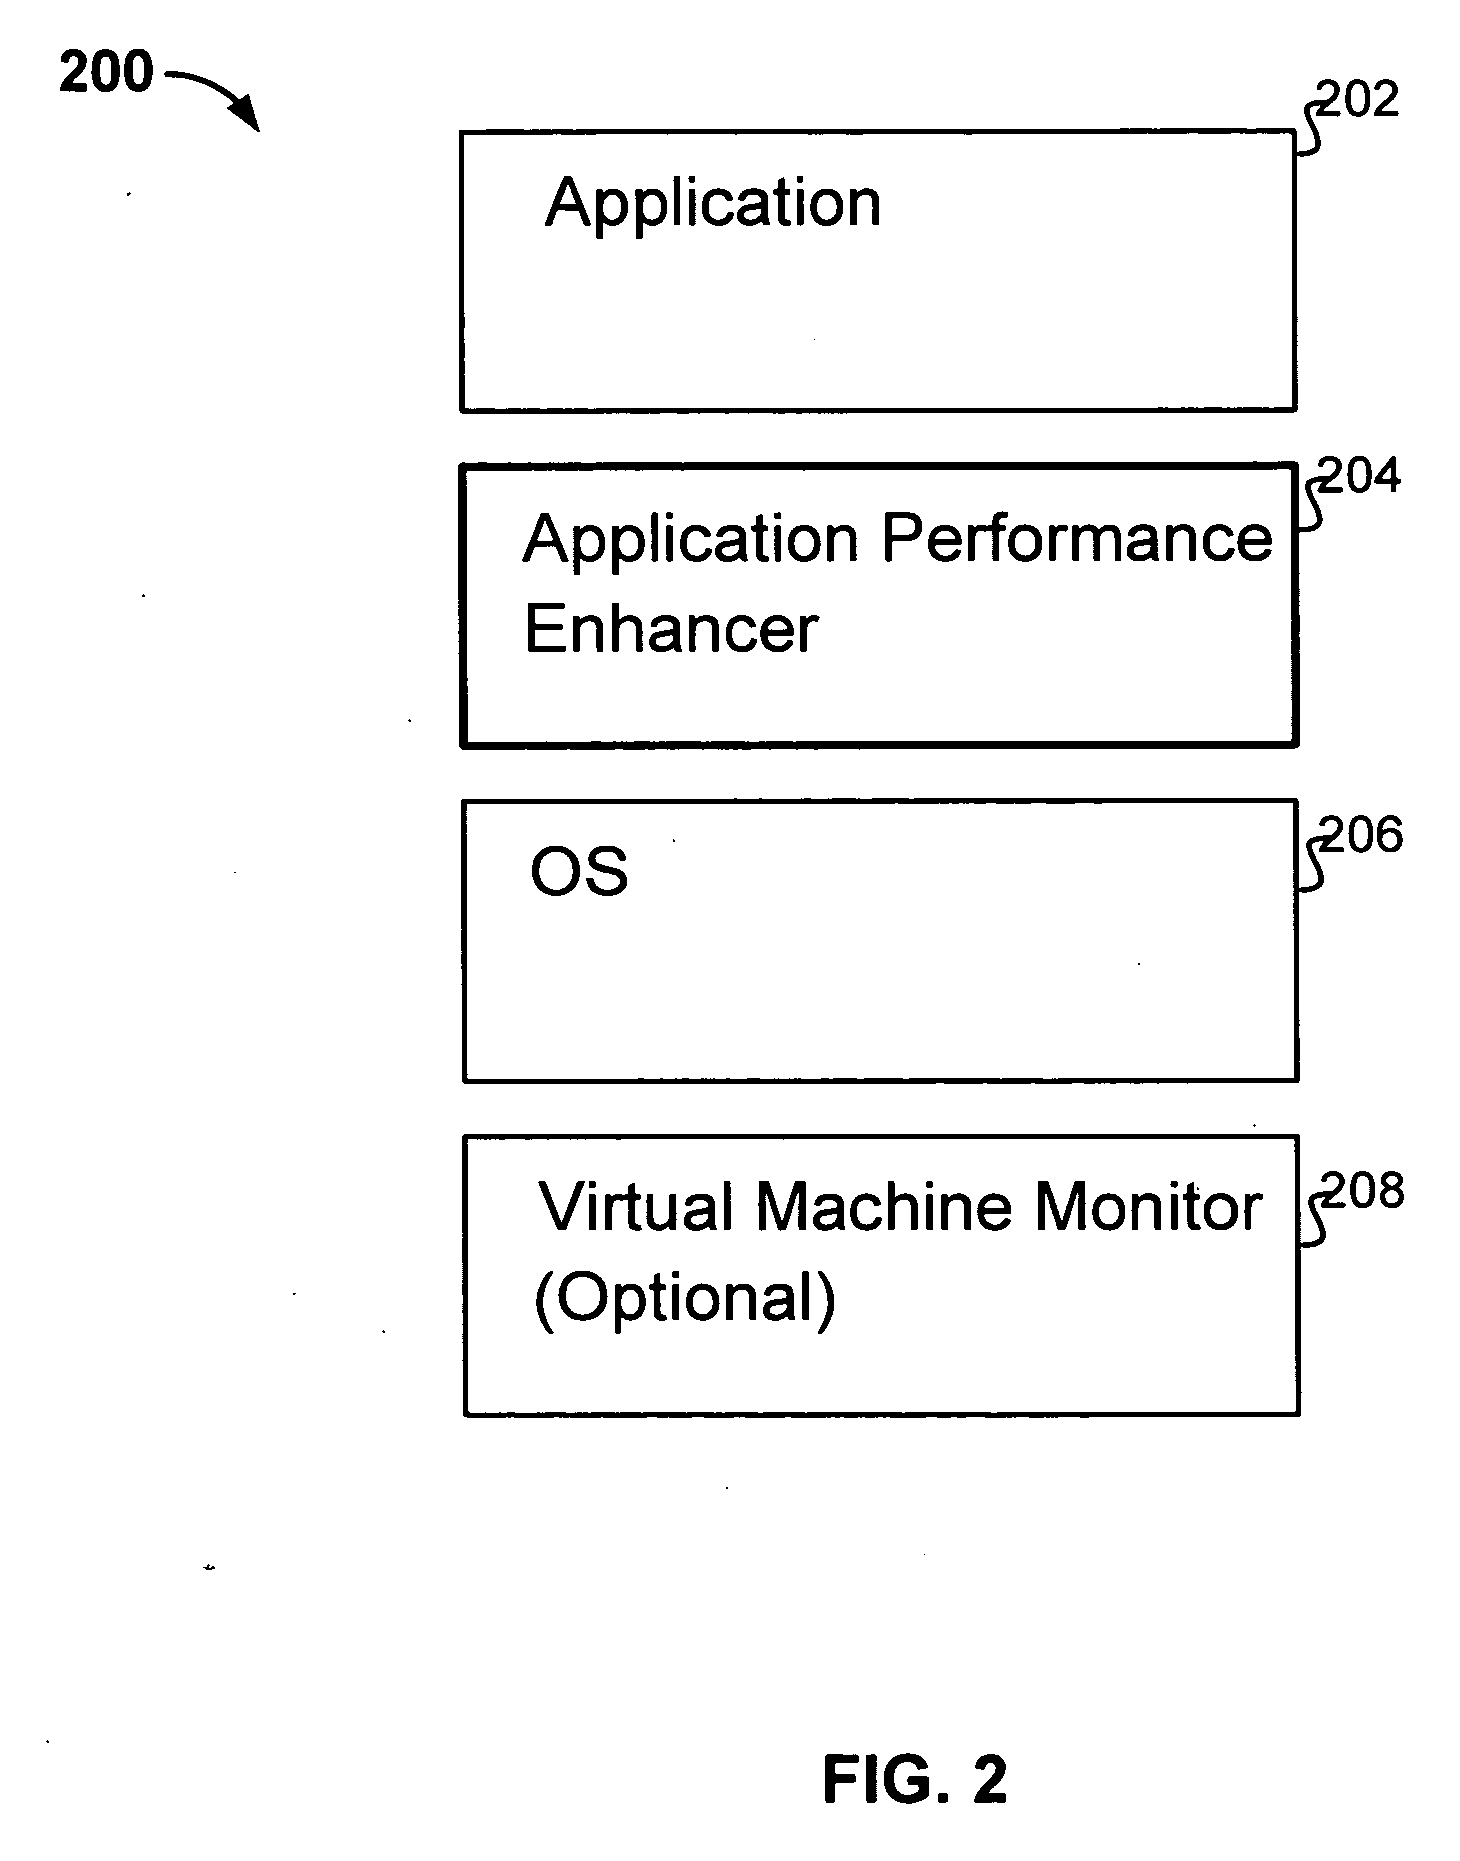 Software application performance enhancement